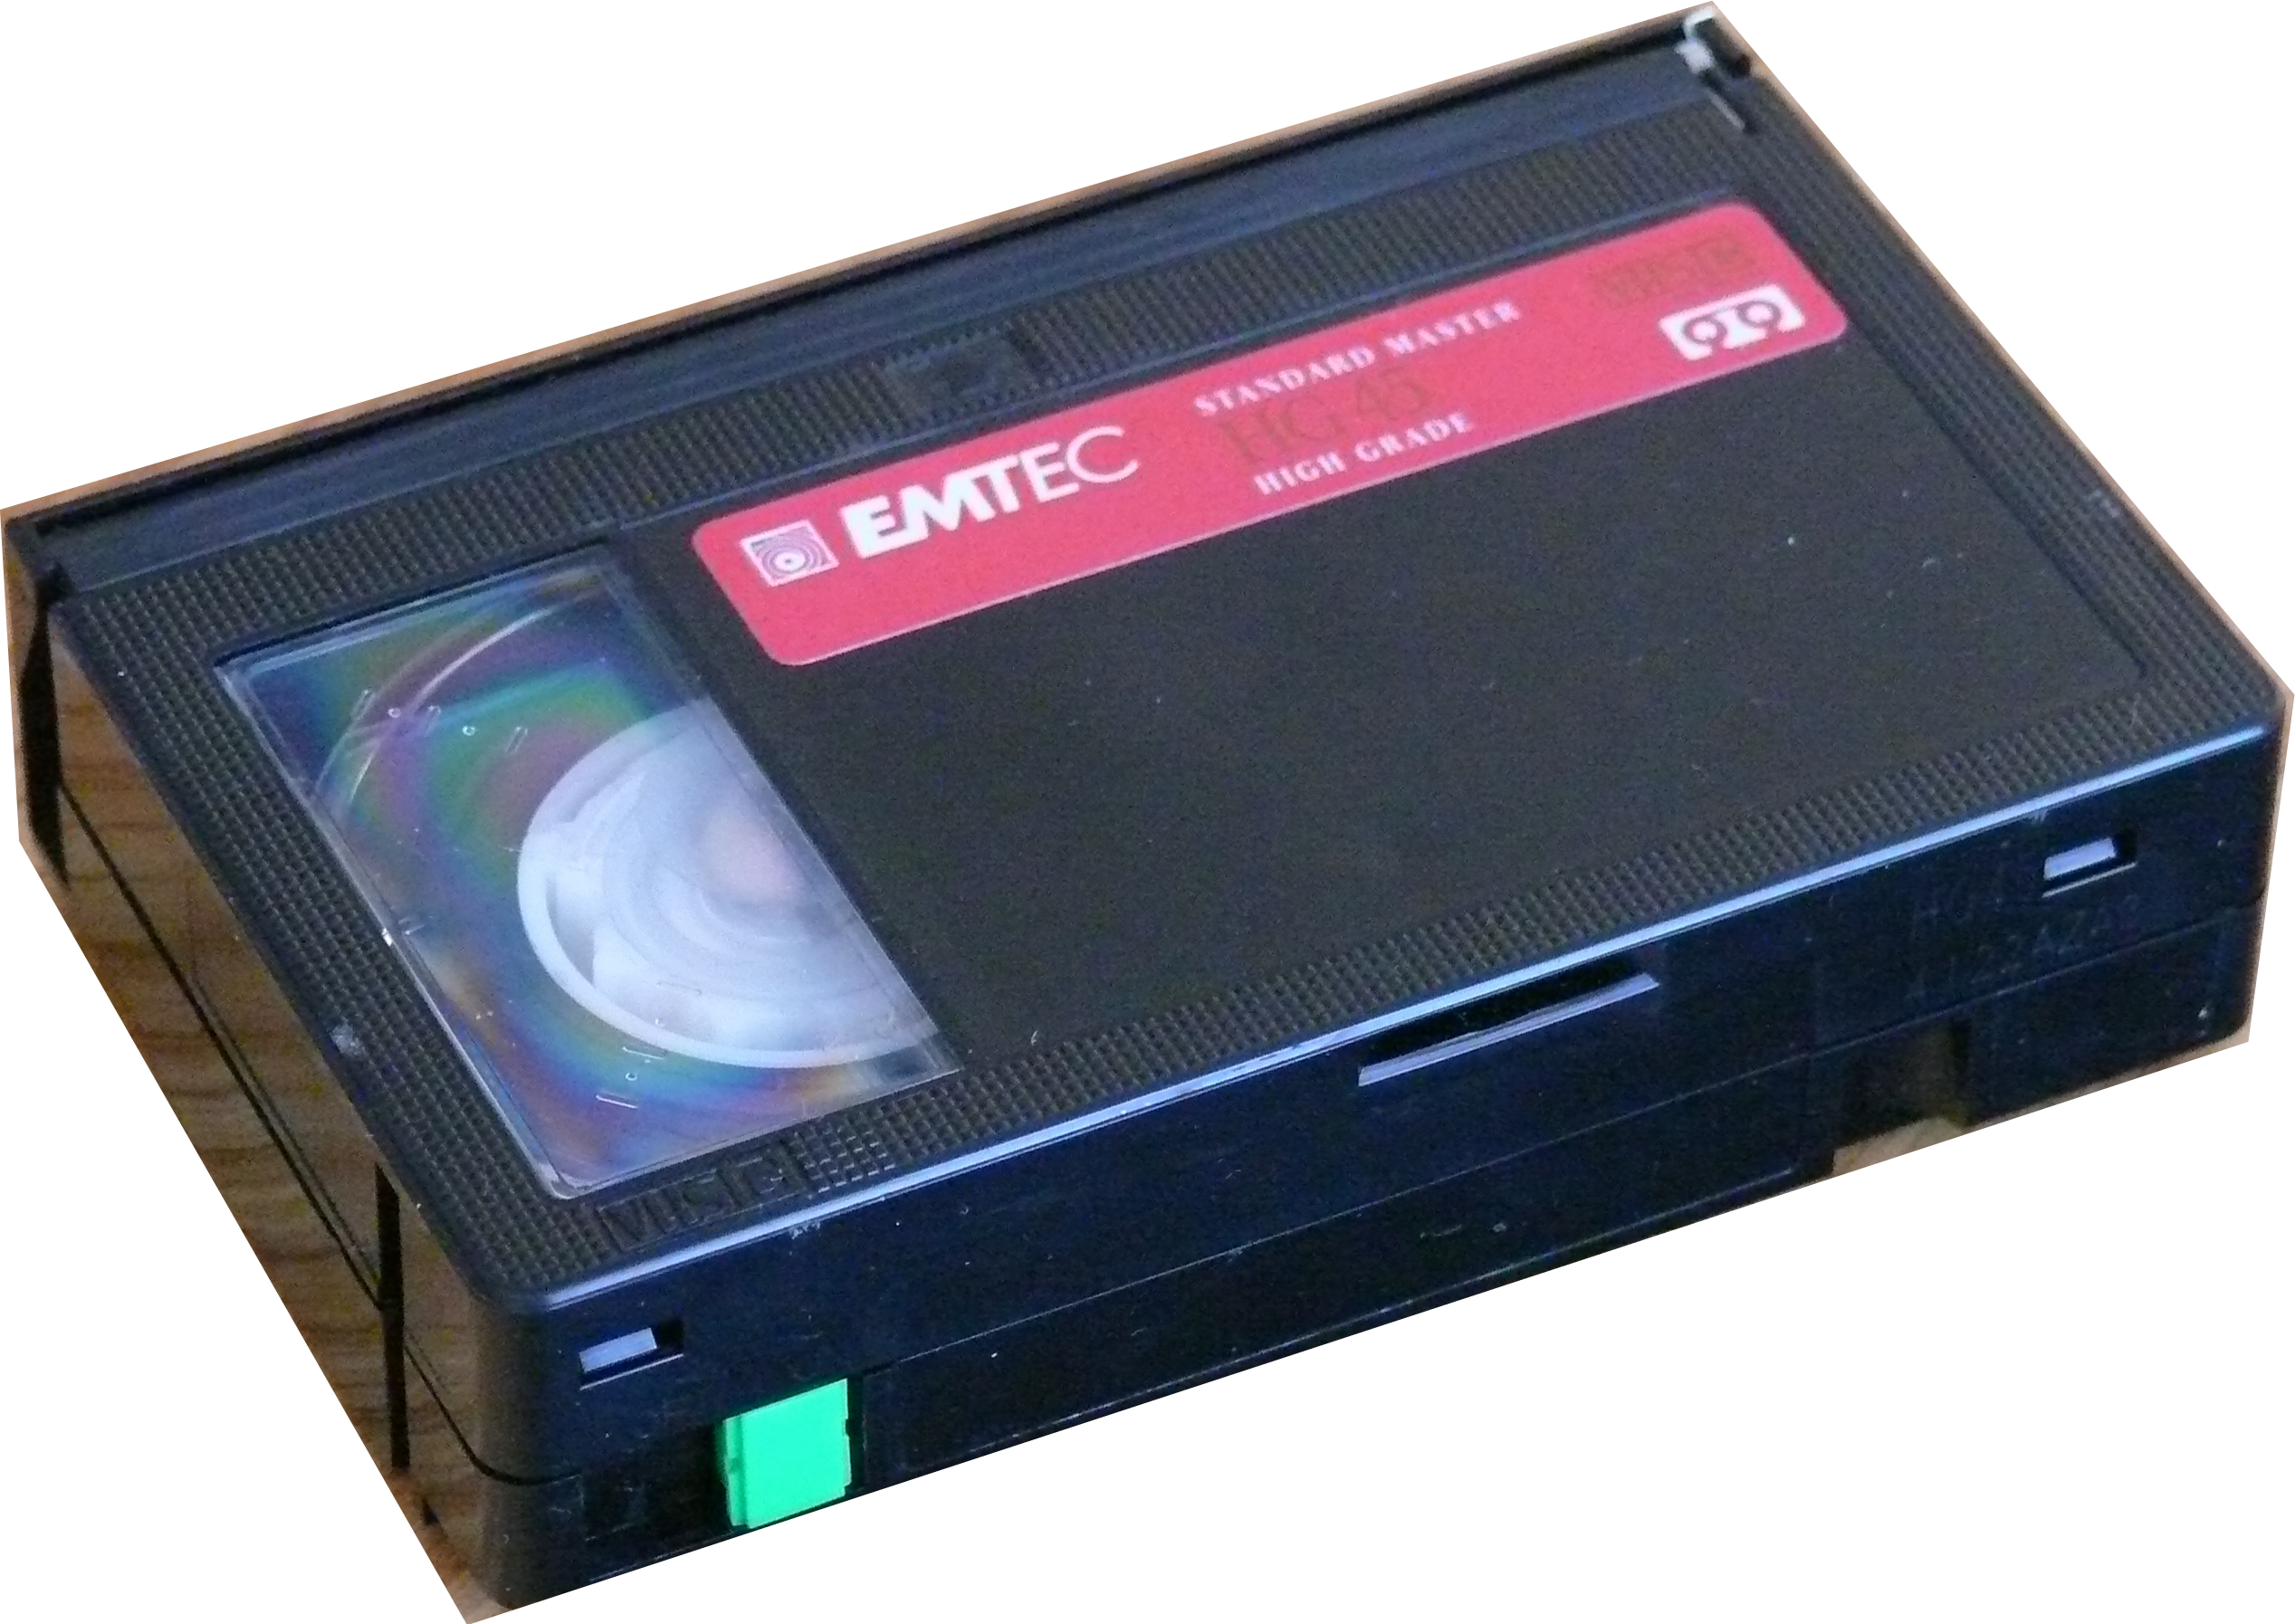 Videocassetten Digitalisieren Wie Vhs Vhs C S Vhs Video 8 Hi 8 Images